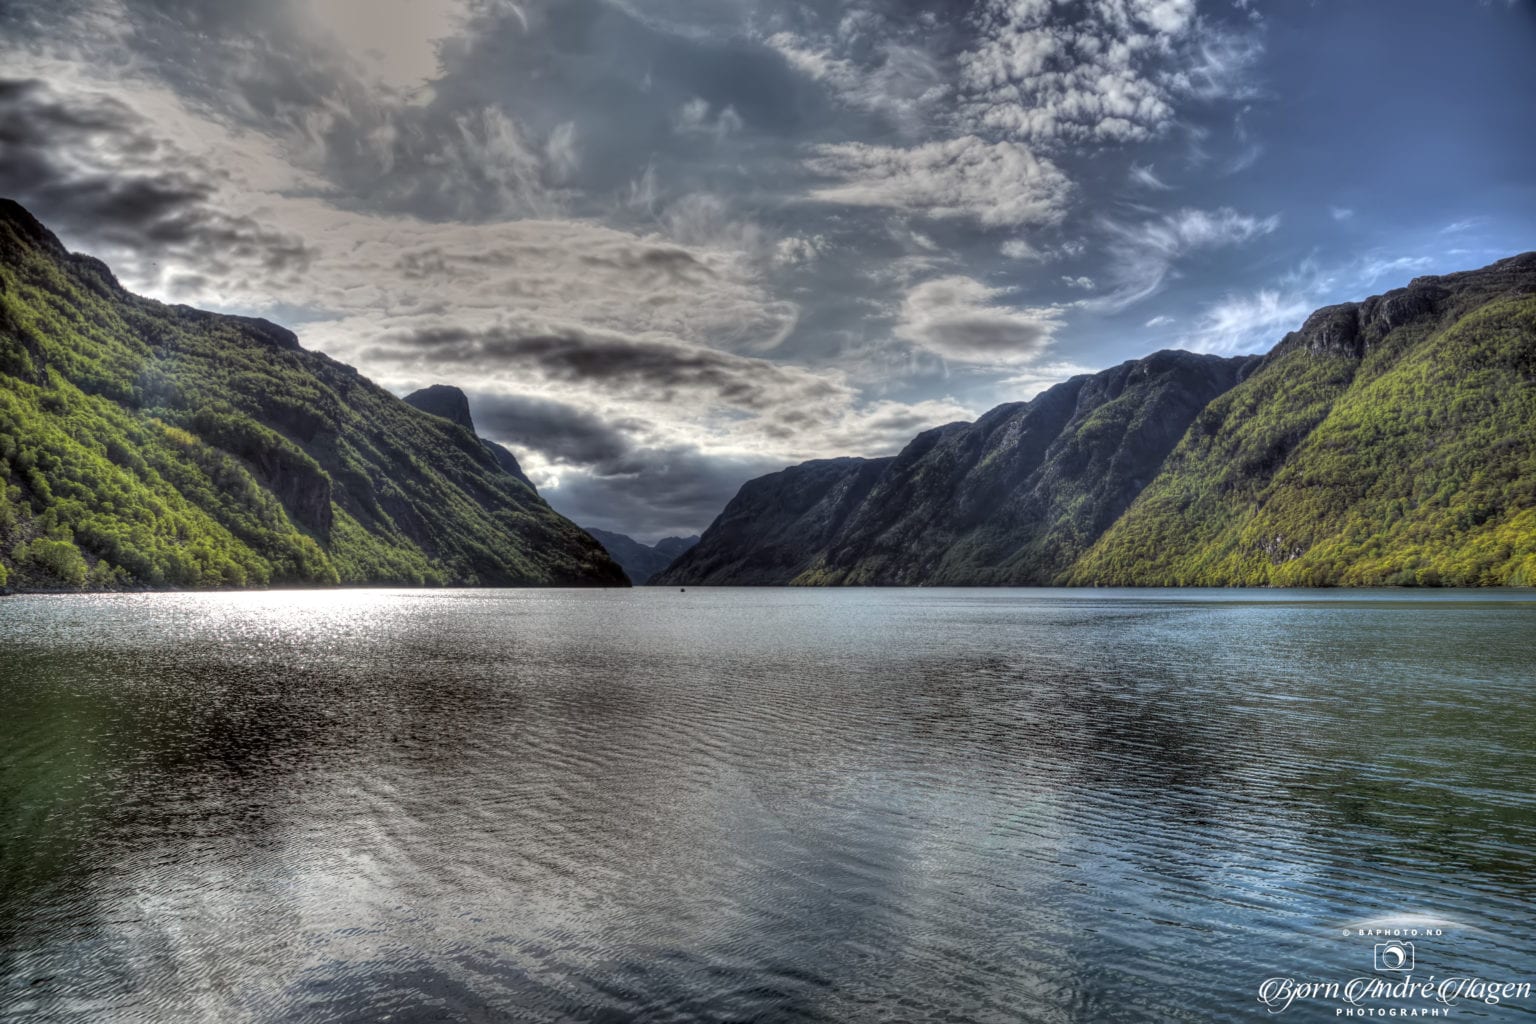 Fjord of Norway 2